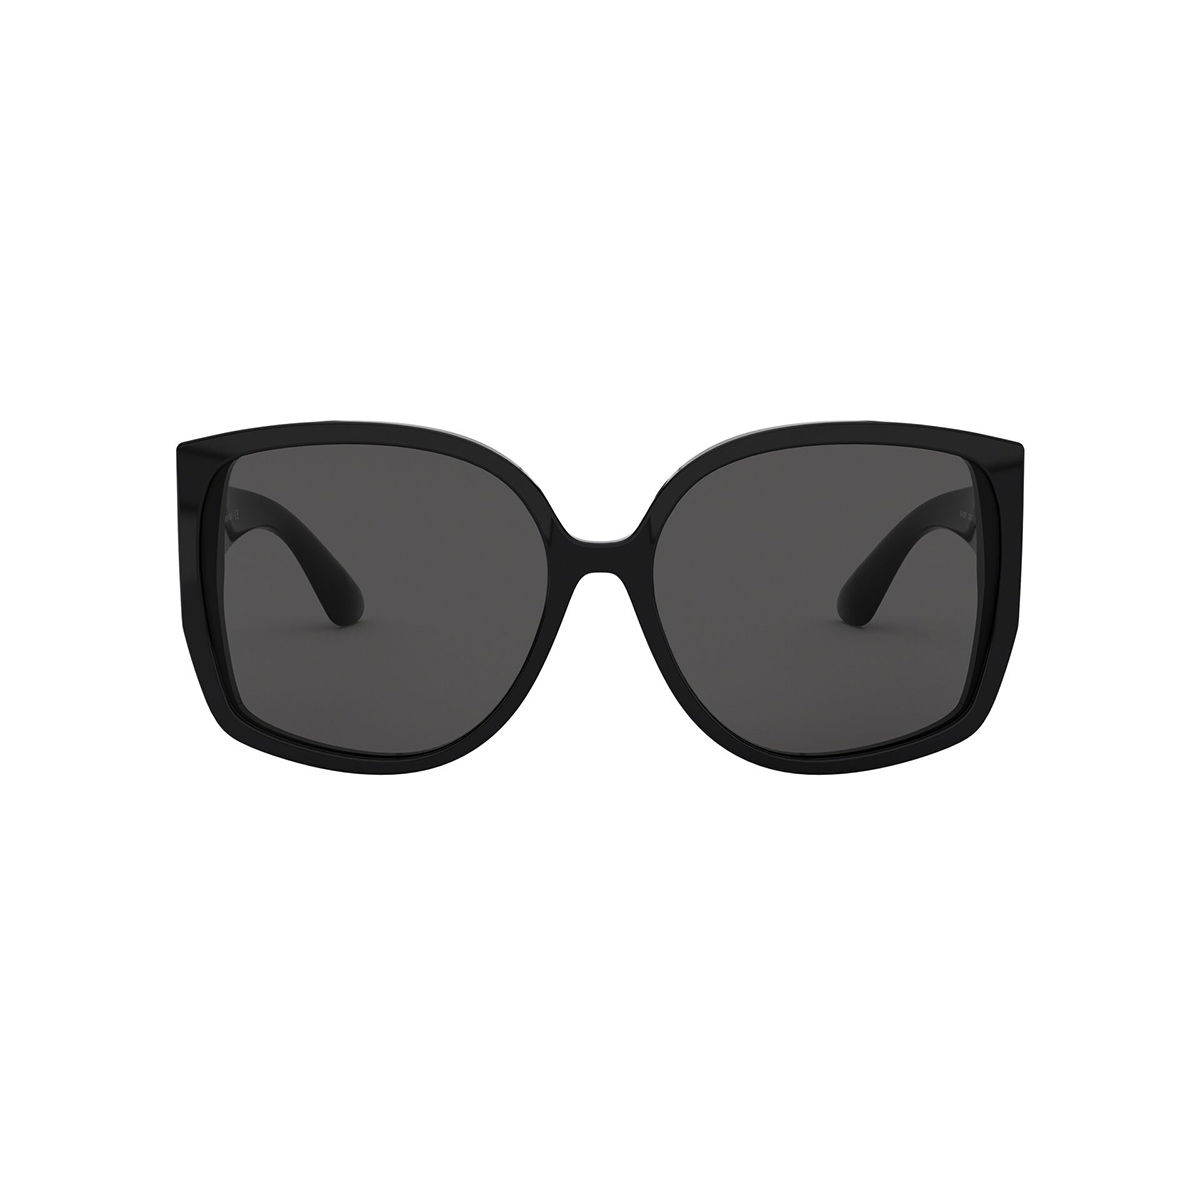 Burberry 0BE4290 SS19 RUNWAY GREY Lens Square Female Sunglasses: Buy ...